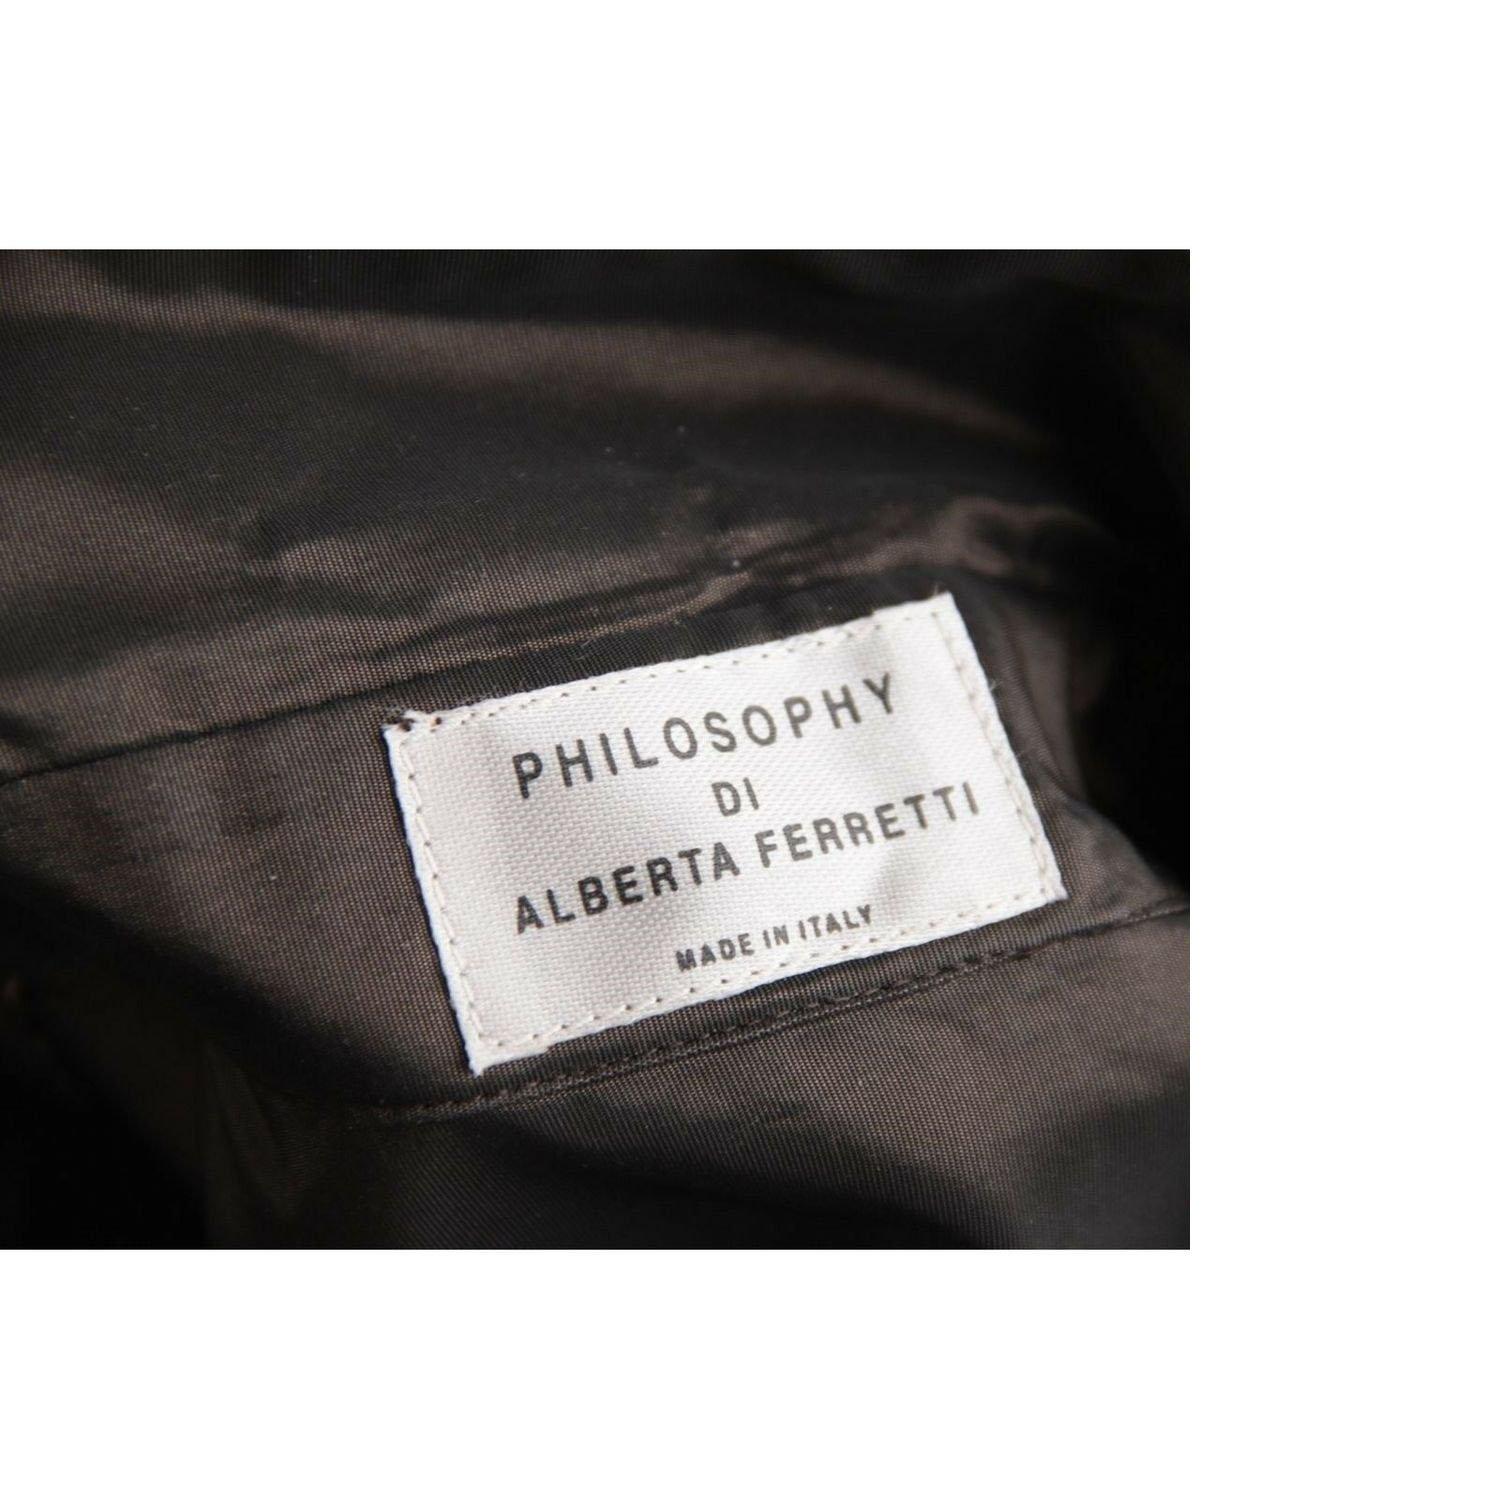 Alberta Ferretti Philosophy by Alberta Ferrett Brown Shirt and Midi Skirt Set Si 2